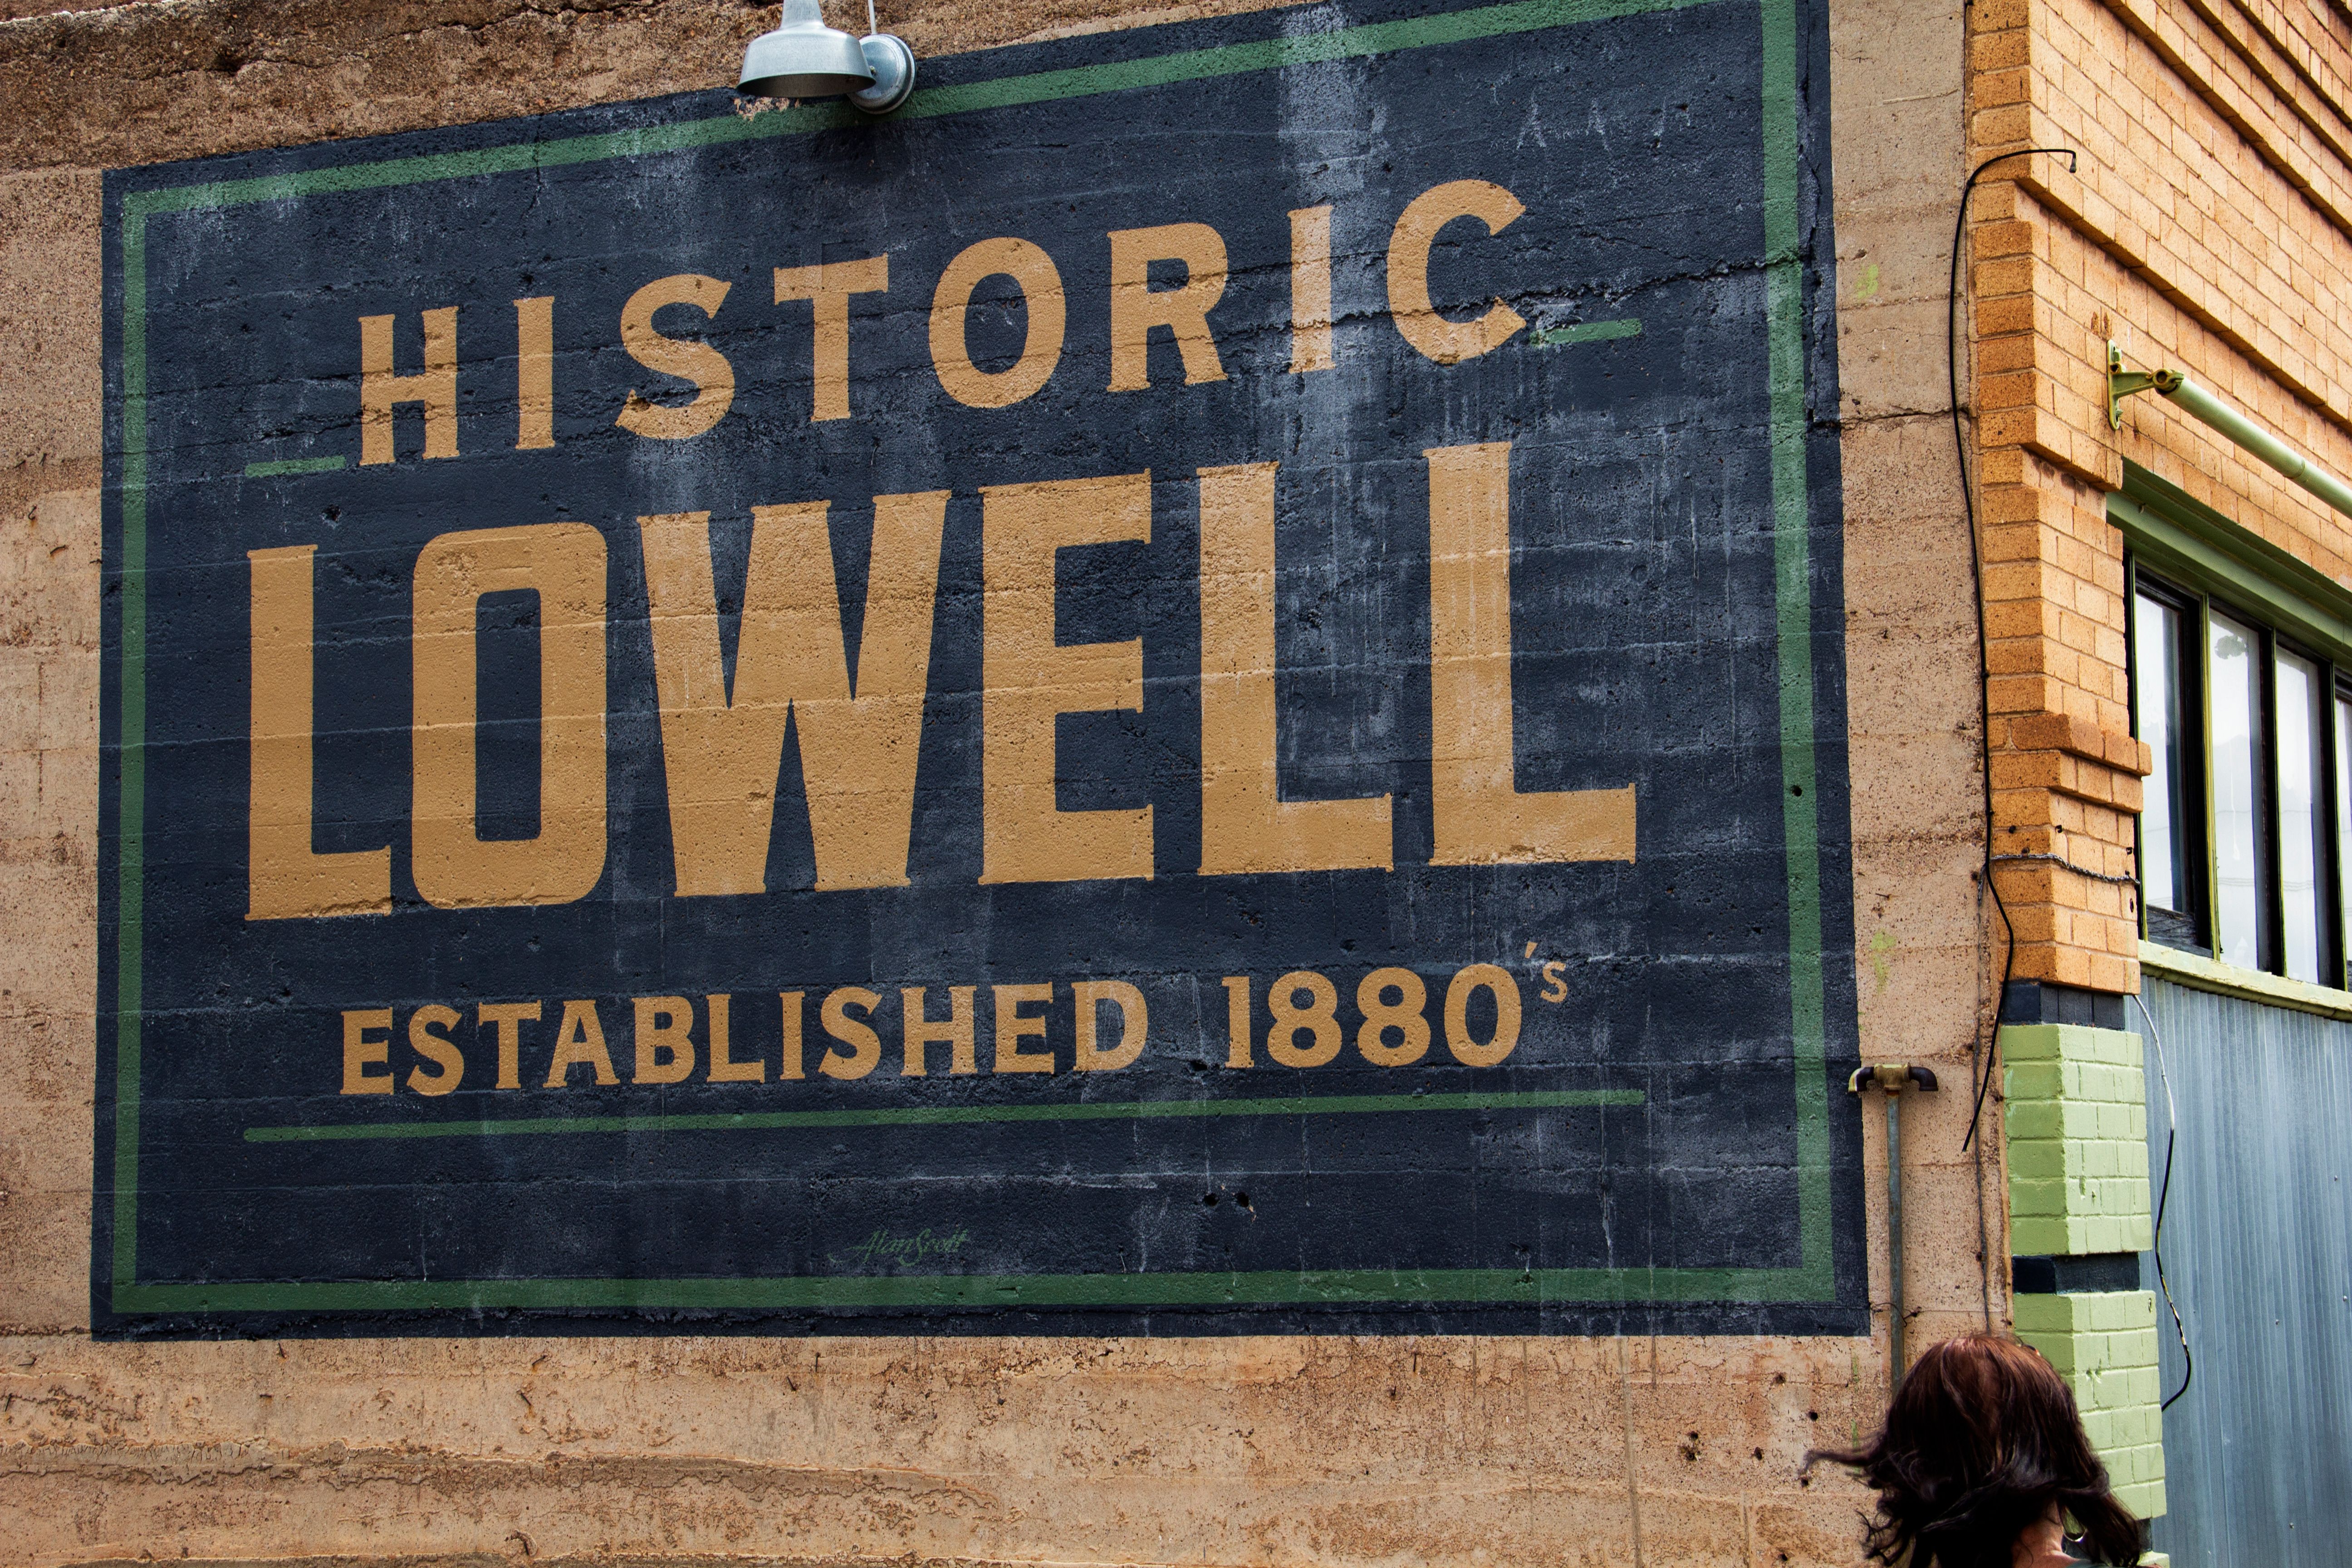 HistoricLowell.jpg